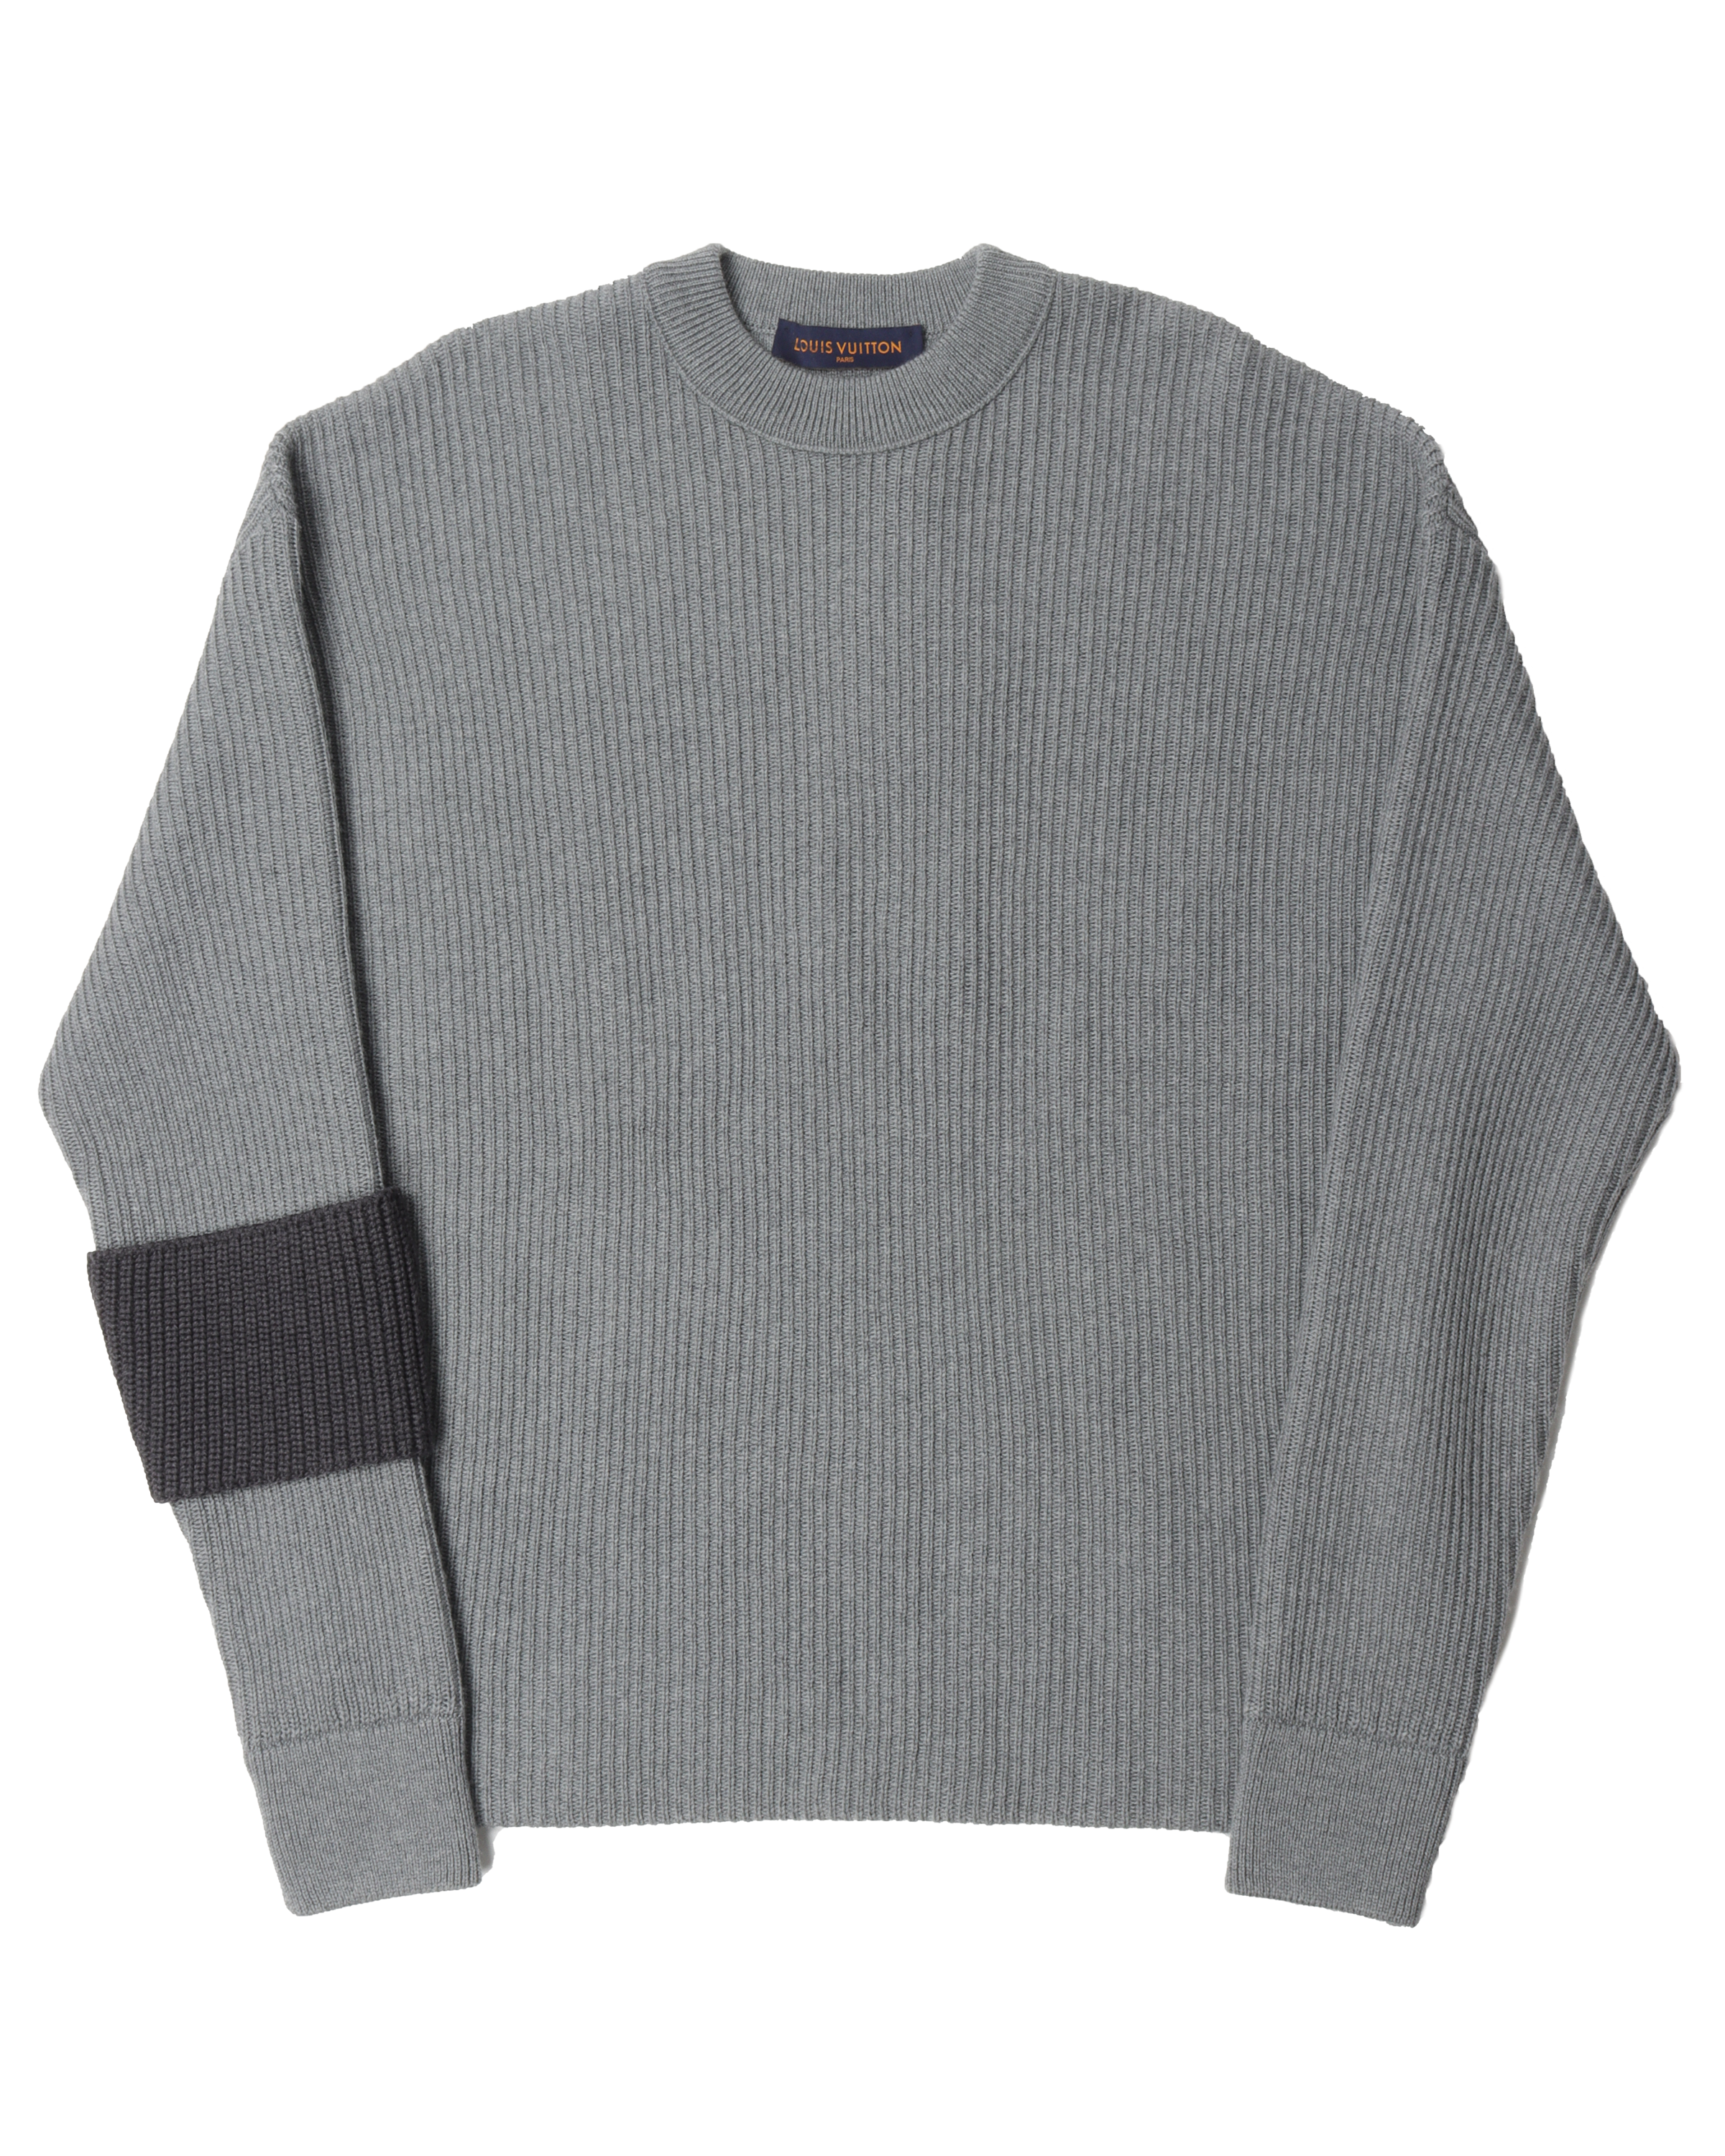 Louis Vuitton Men's Monogram Jacquard Knit Crew Neck Sweatshirt